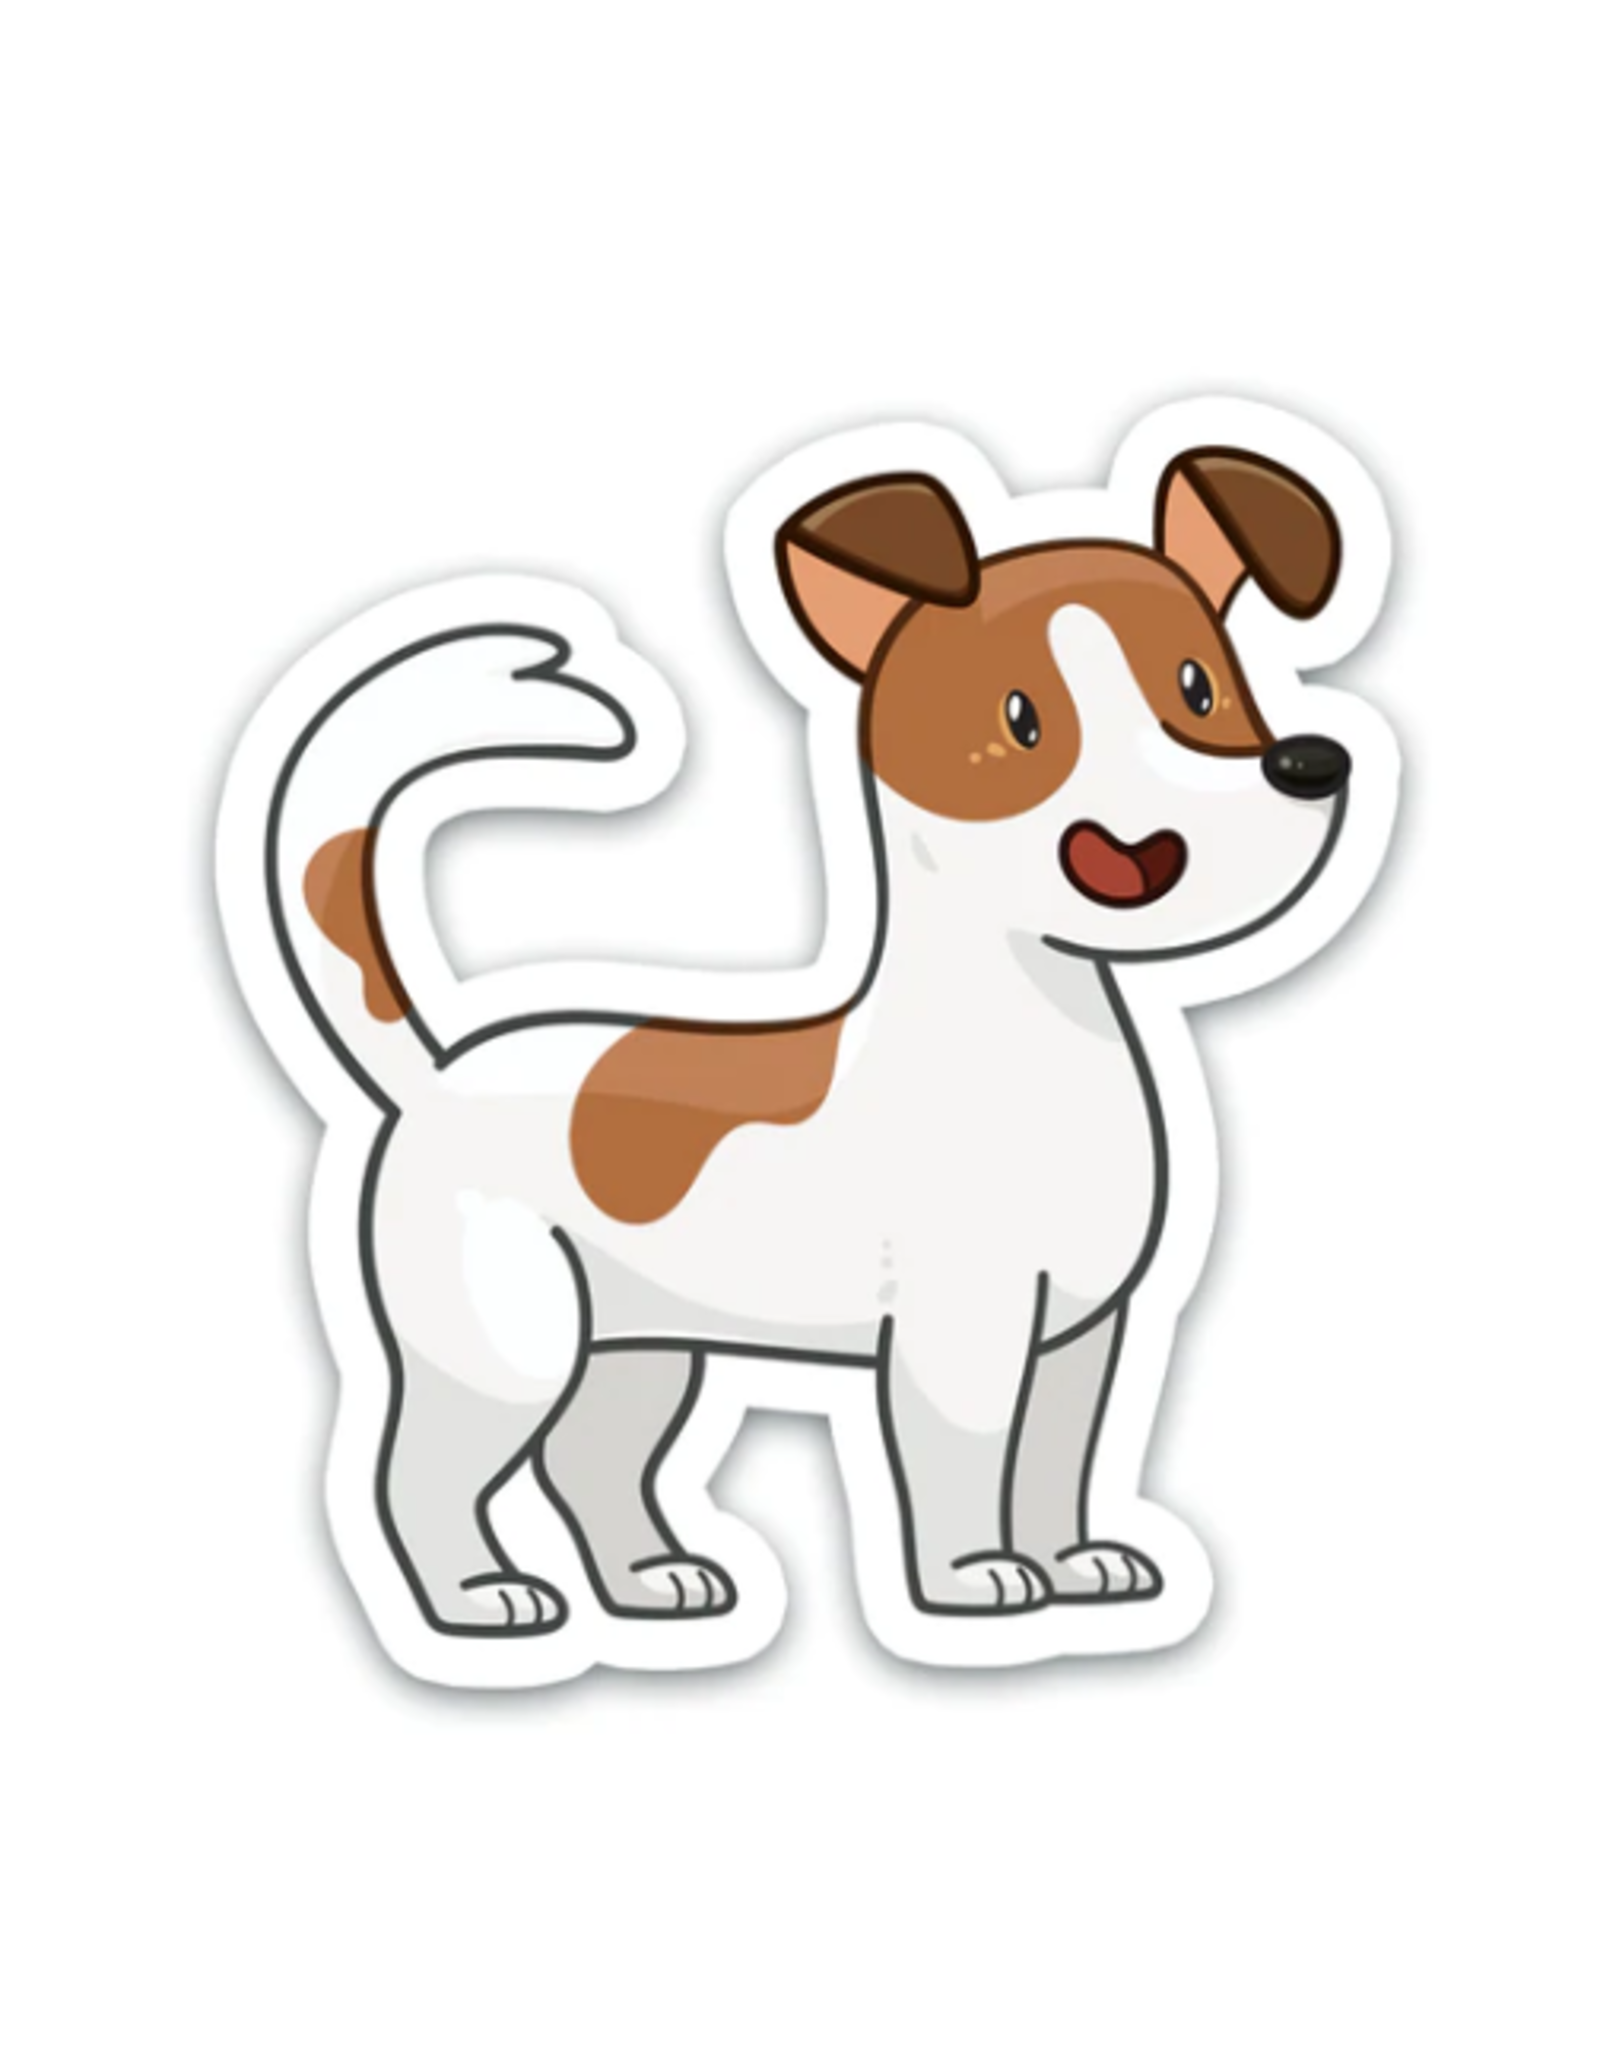 Jack Russell Terrier Vinyl Sticker